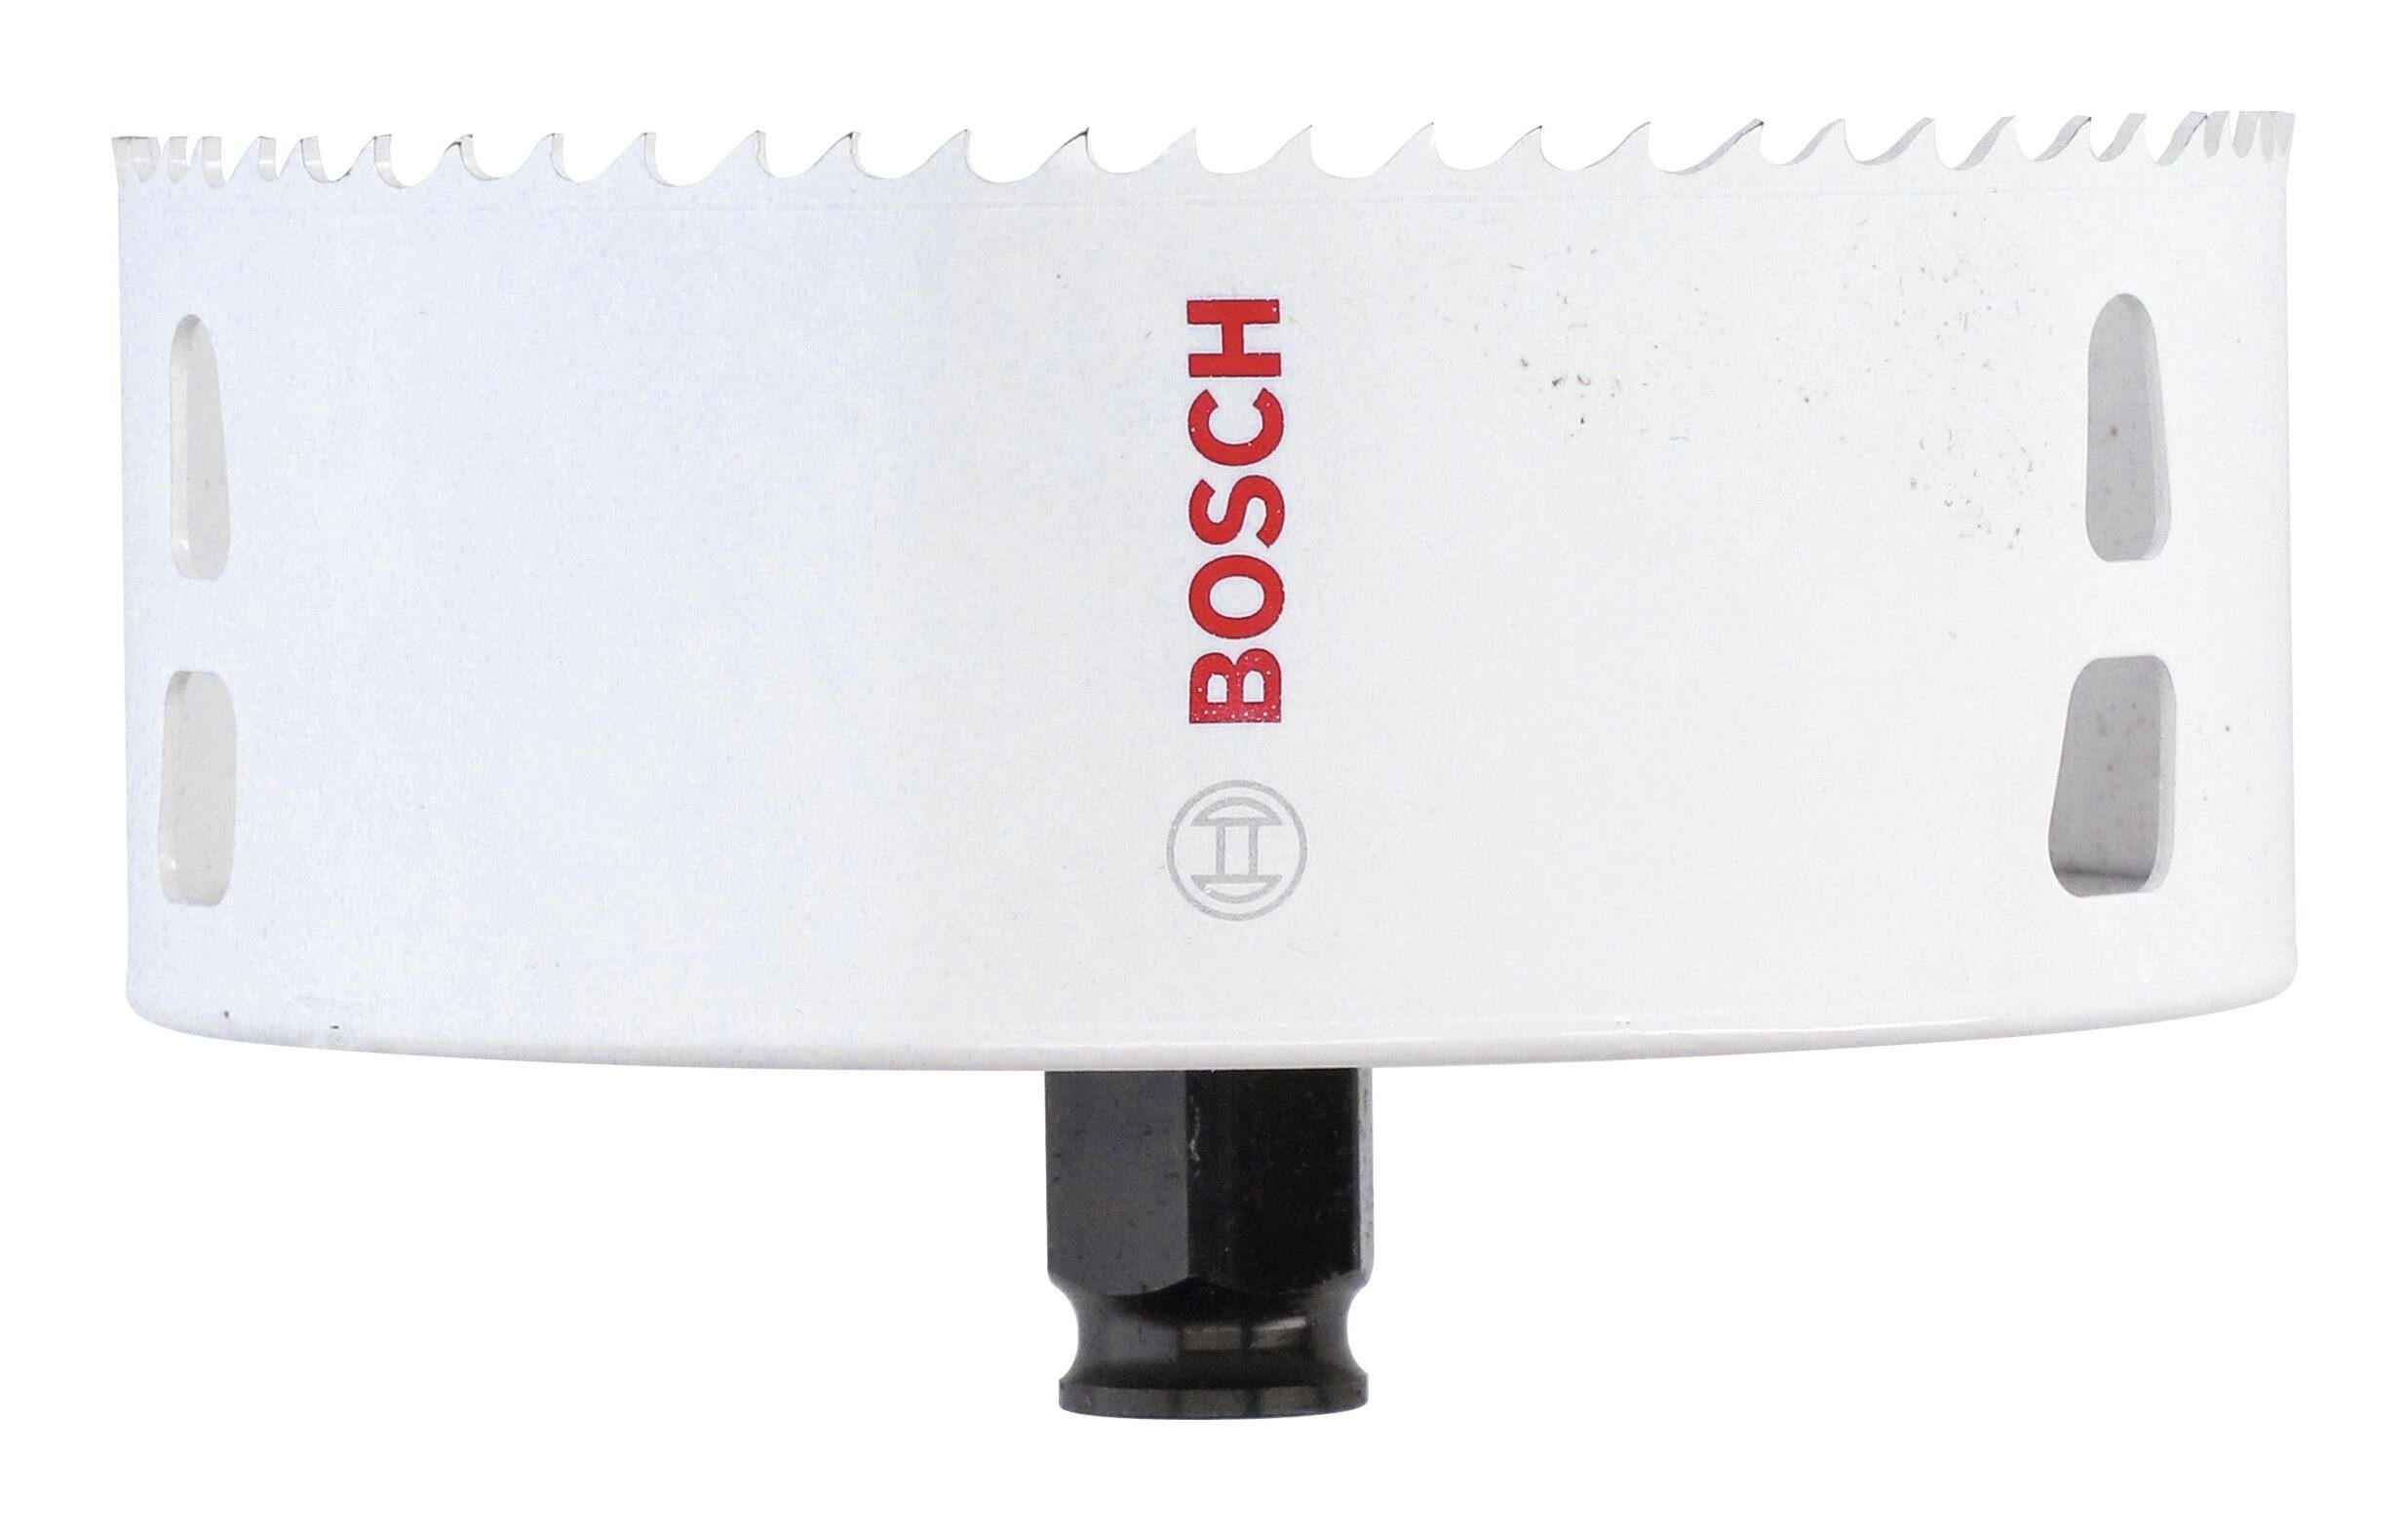 BOSCH Lochsäge, Ø 121 mm, Progressor for Wood and Metal